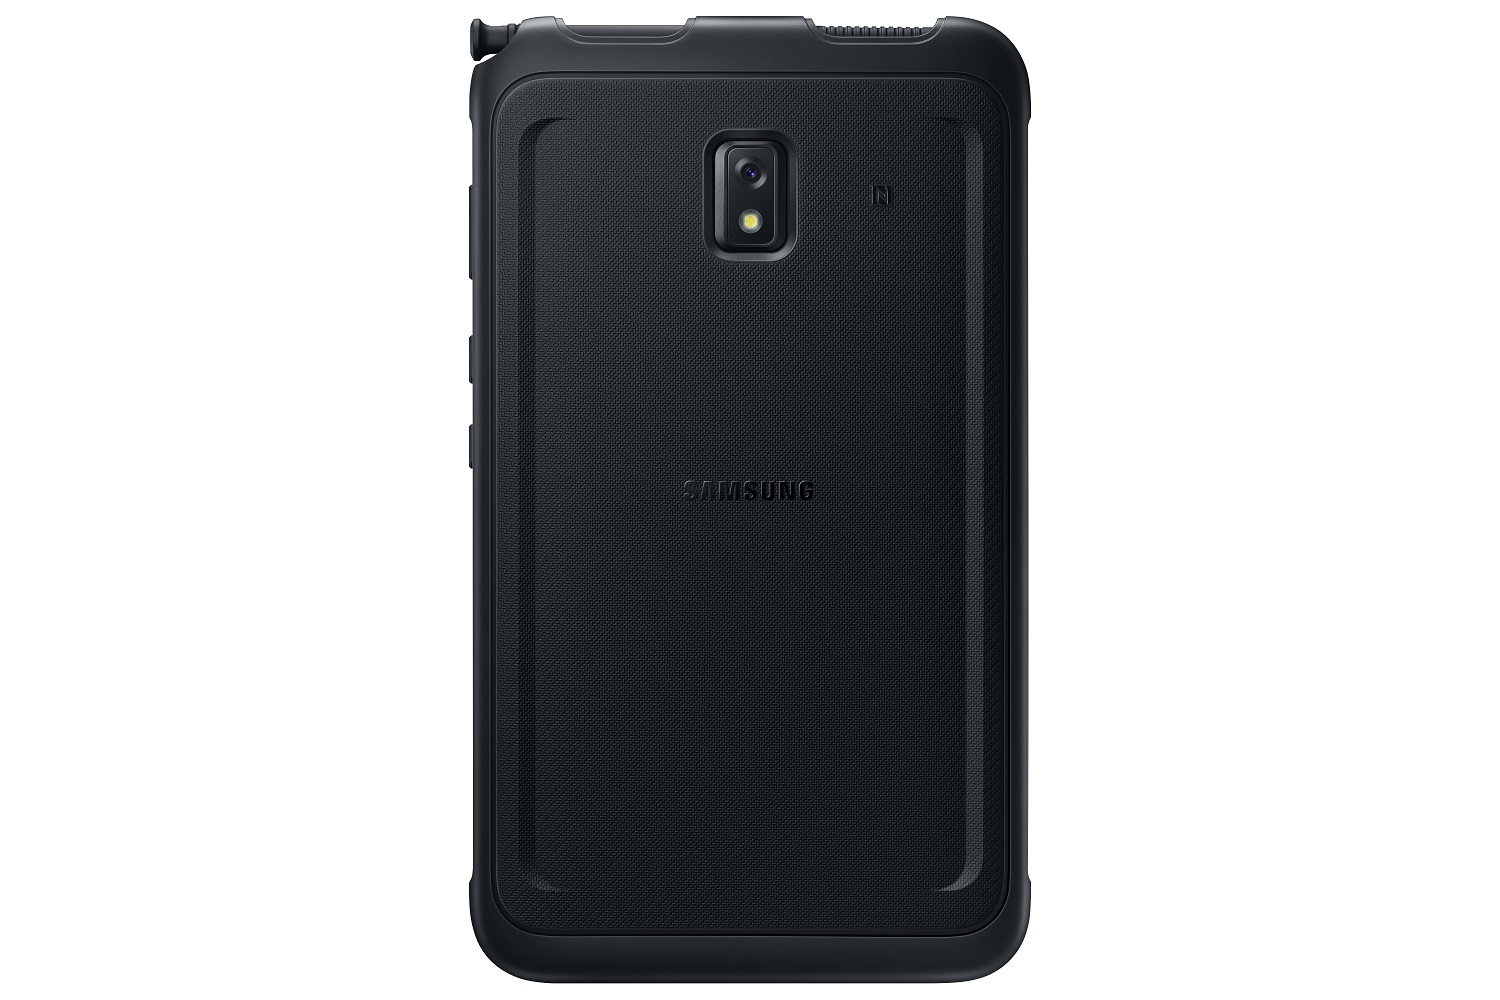 Samsung Galaxy Tab Active 3 tablet